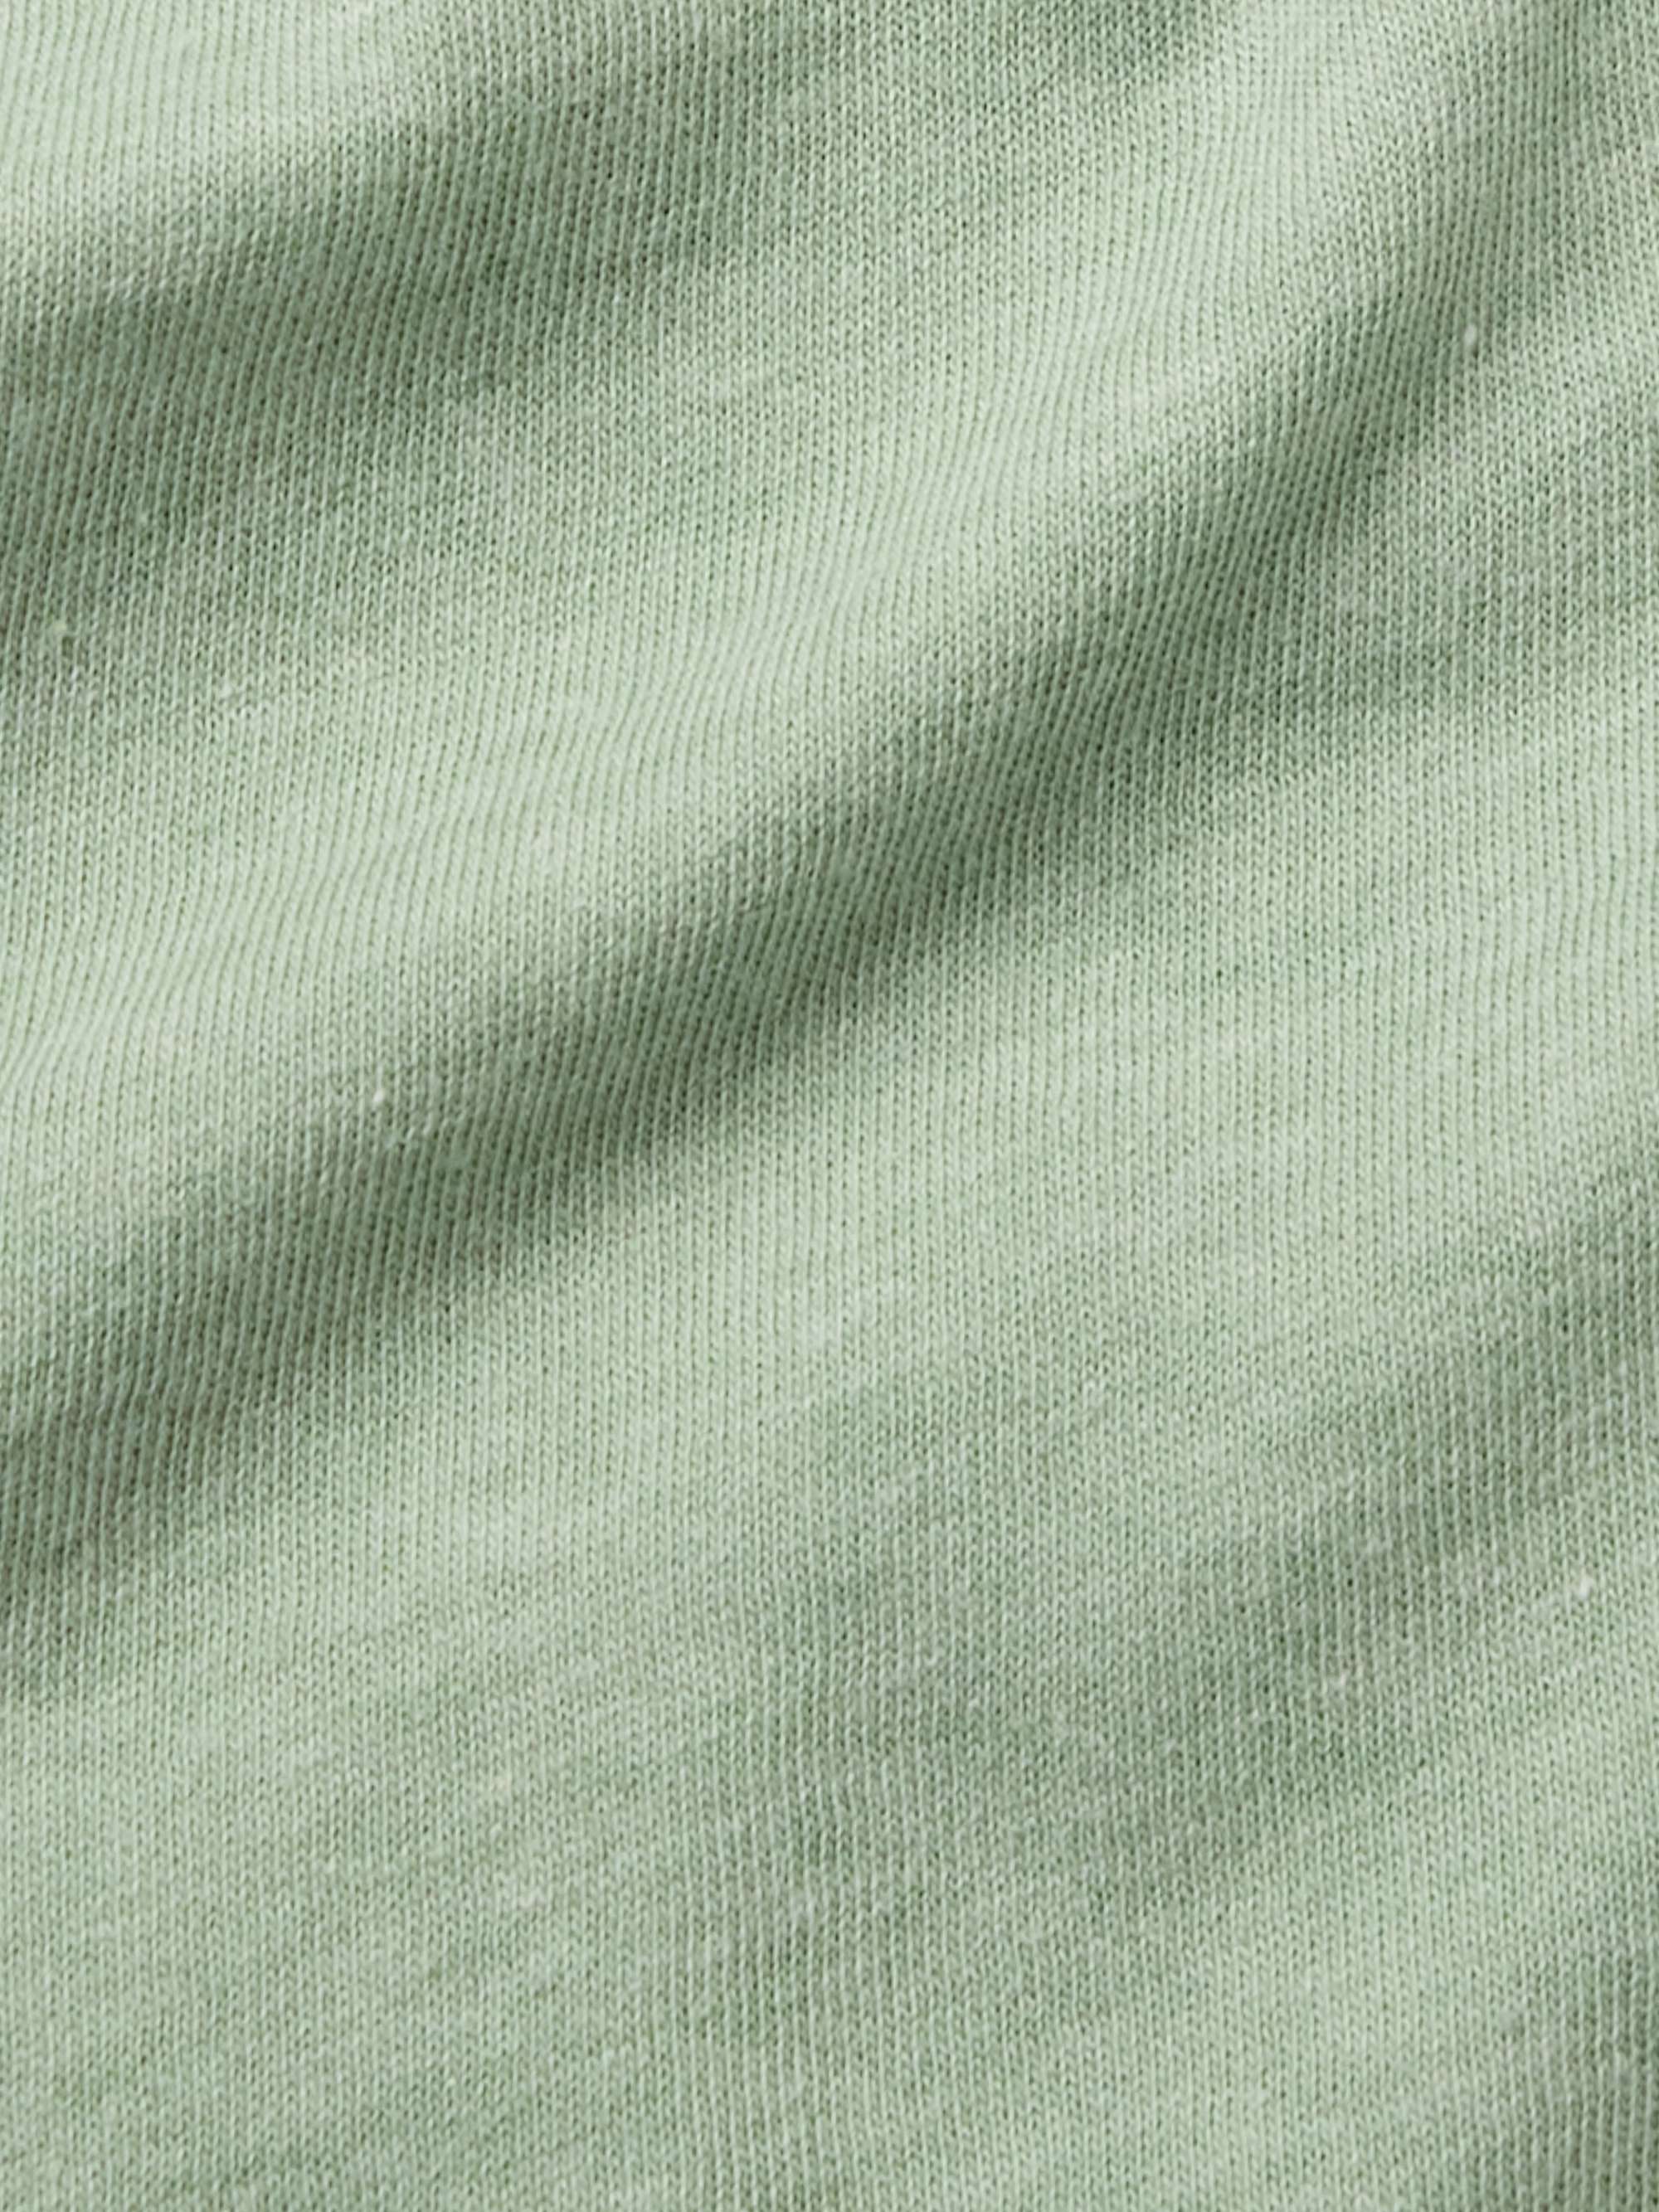 TOM FORD Cotton-Blend Jersey T-Shirt